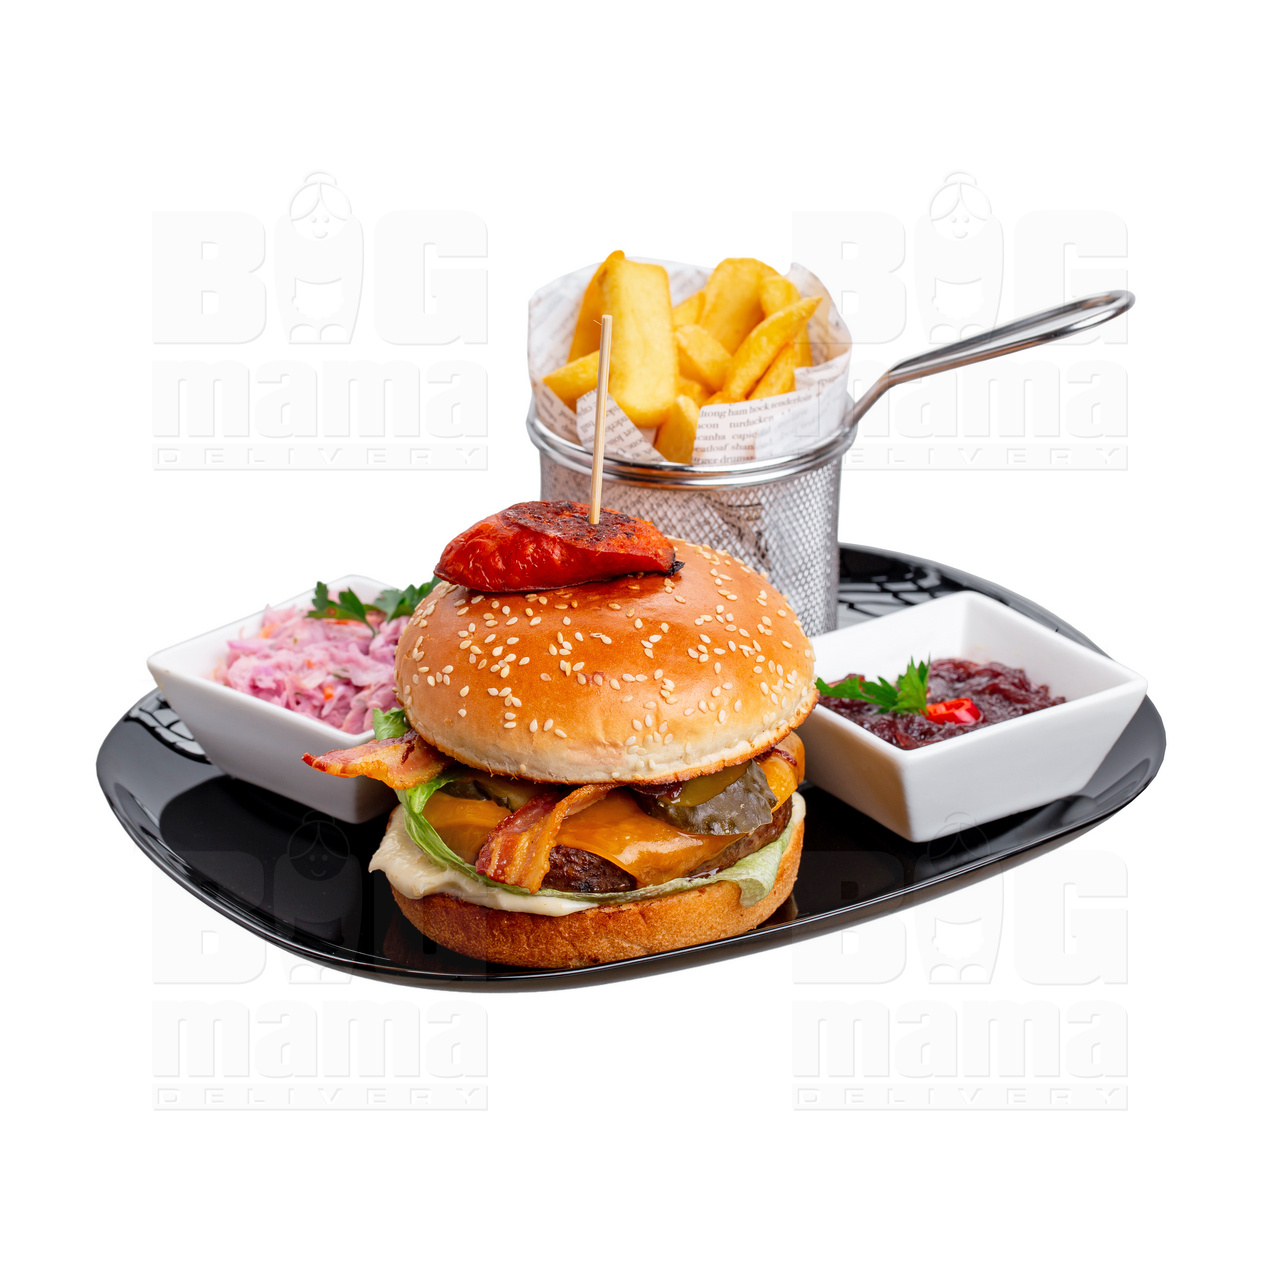 Product #256 image - Hungarian burger menu